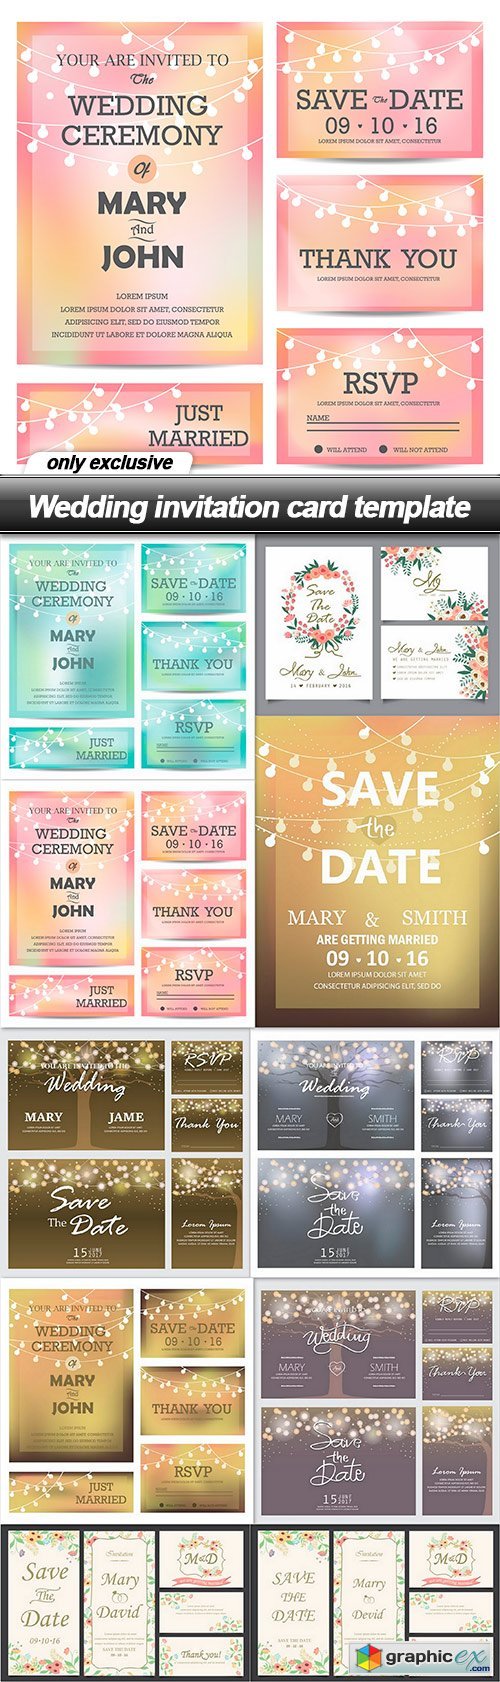 Wedding invitation card template - 10 EPS